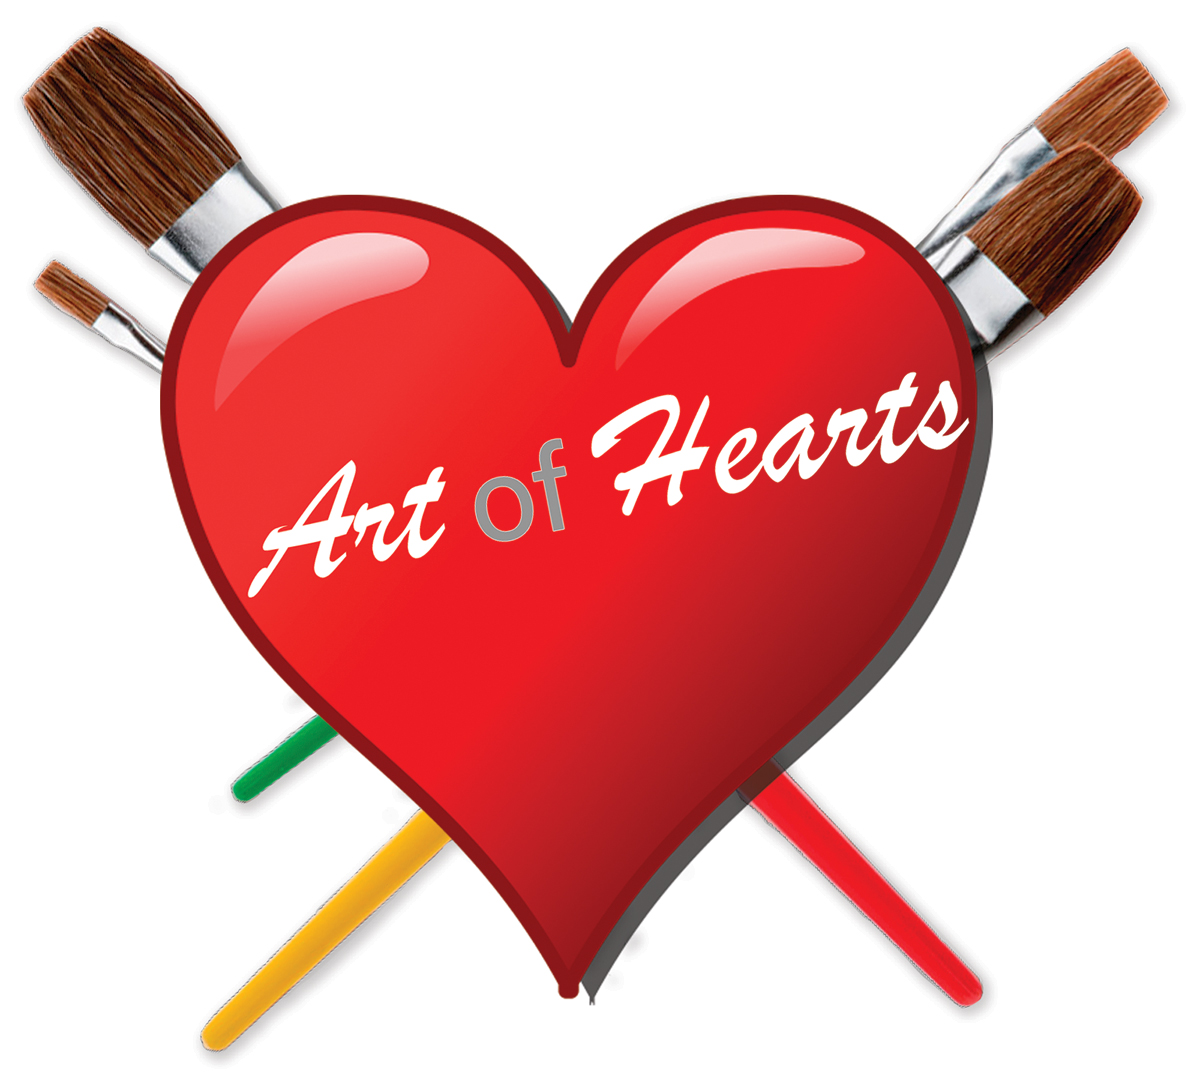 ART-OF-HEARTS-LOGO-sharpened